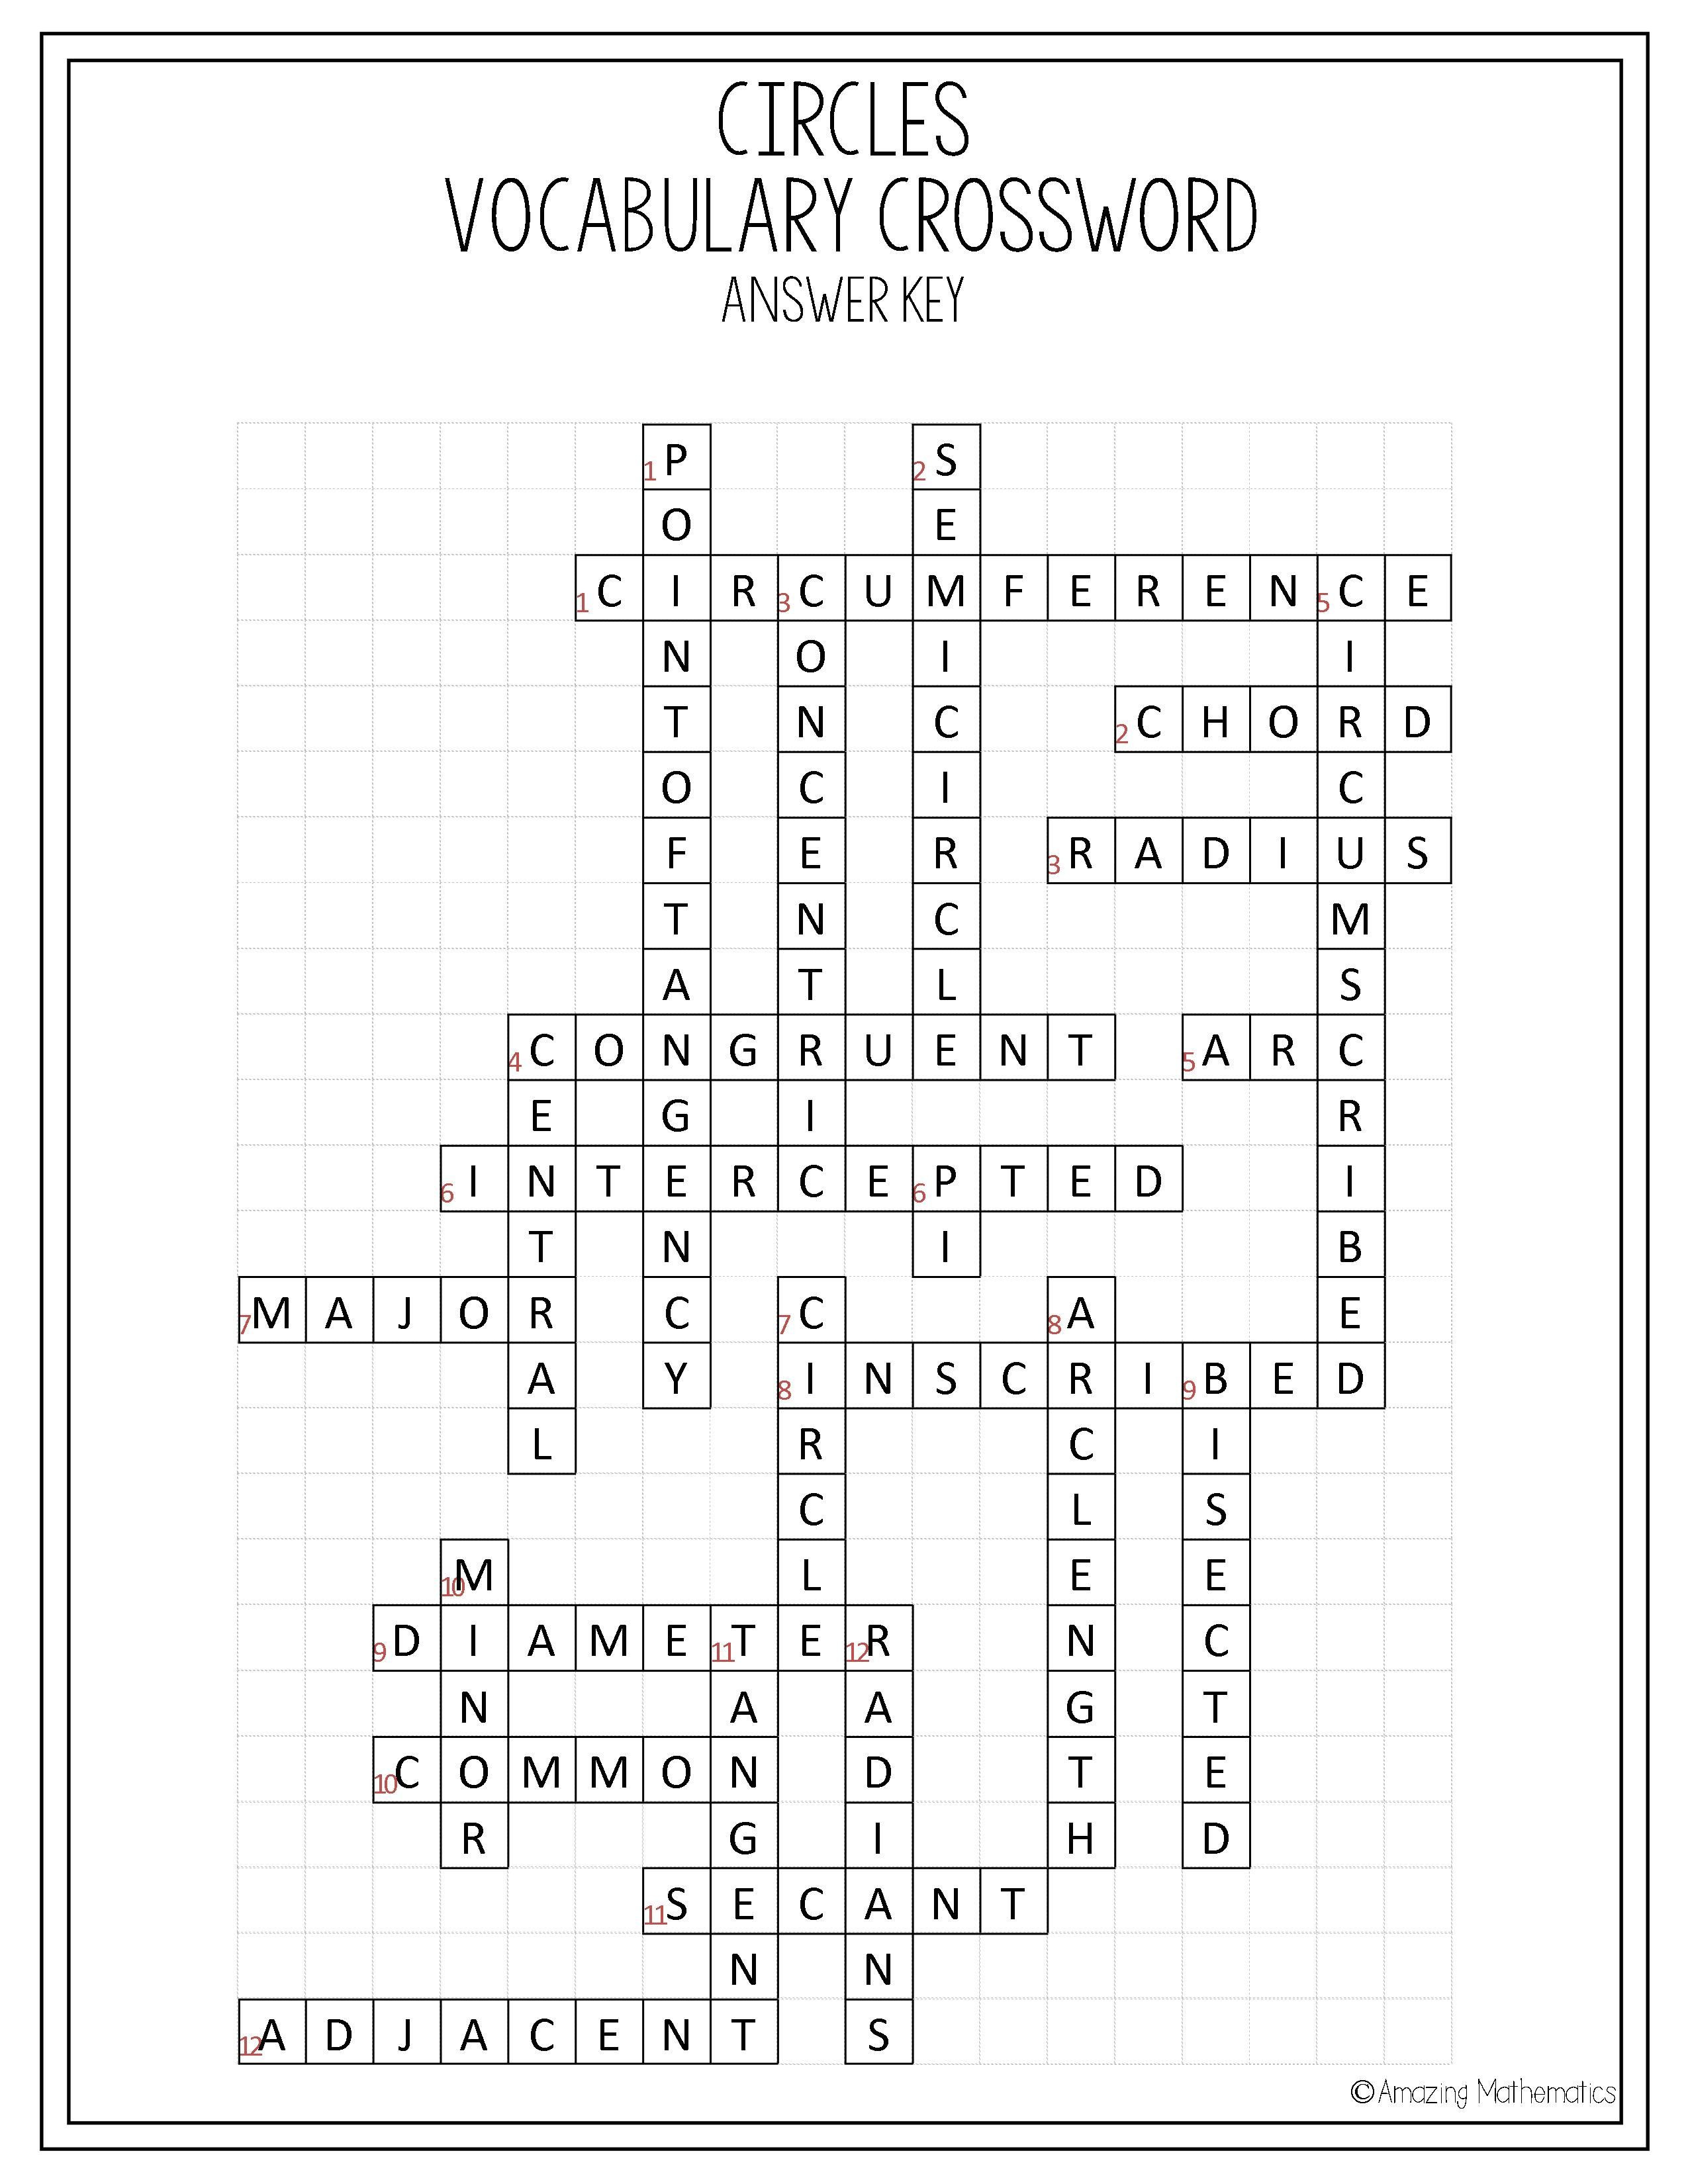 8th Grade Math Vocabulary Crossword Circles Vocabulary Crossword